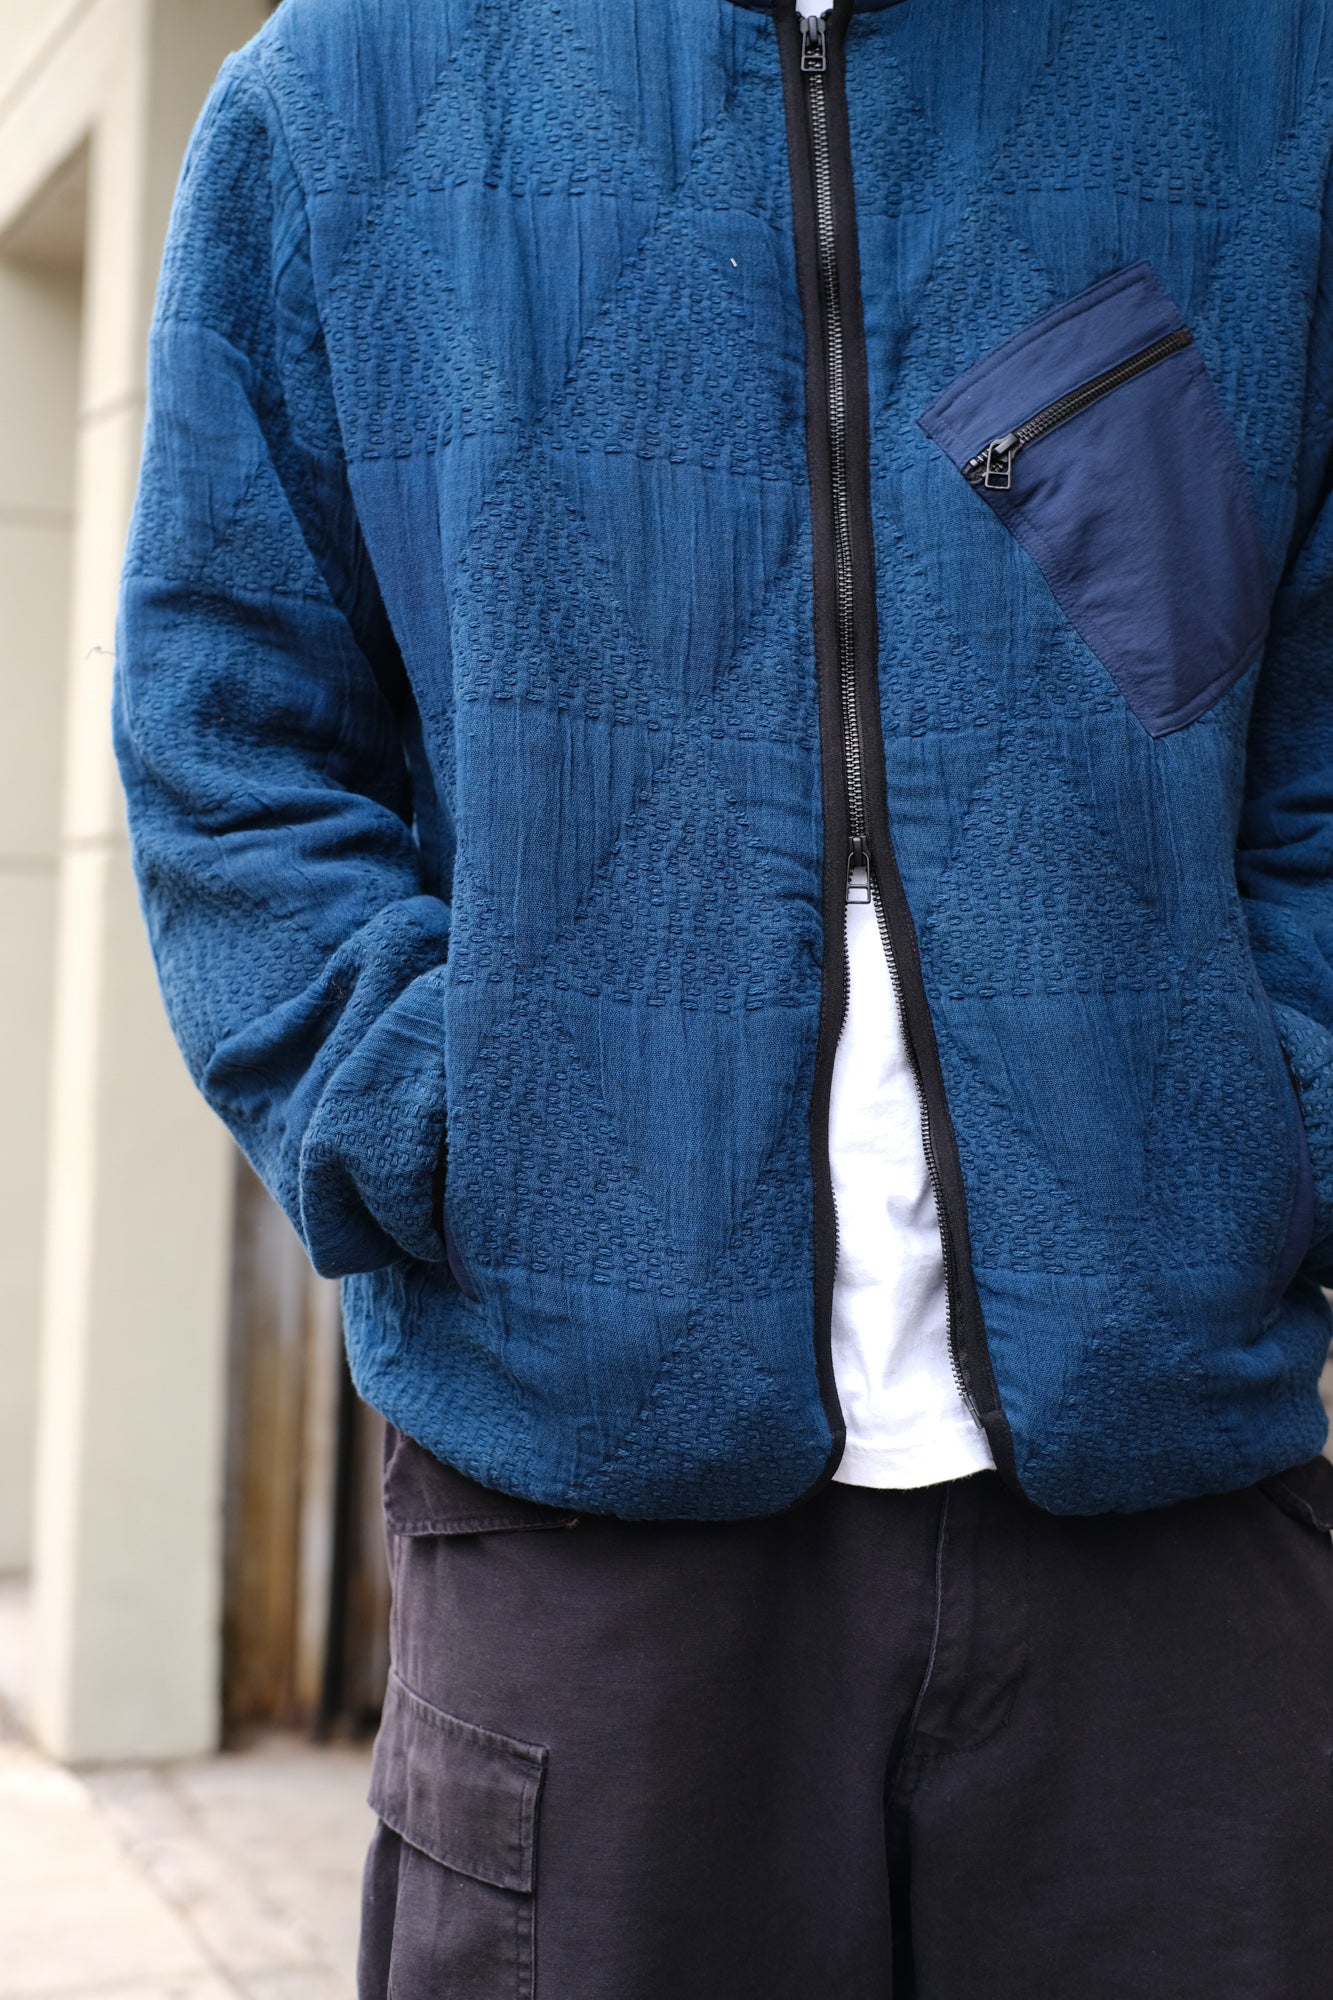 A close up image of a blue jacket.